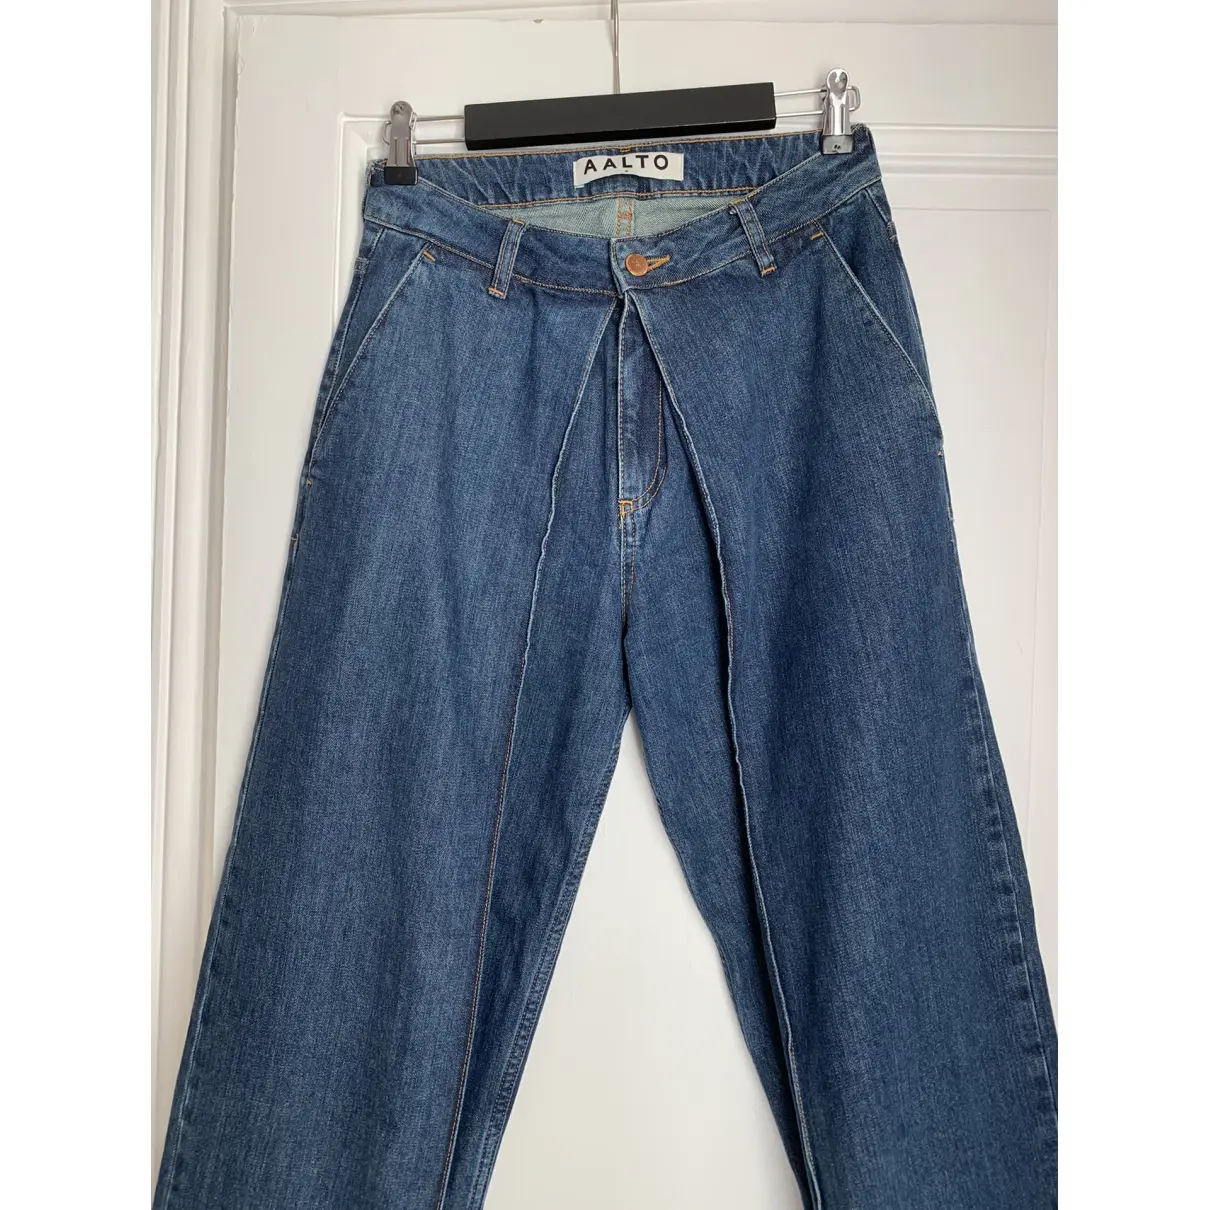 Buy Aalto Large jeans online